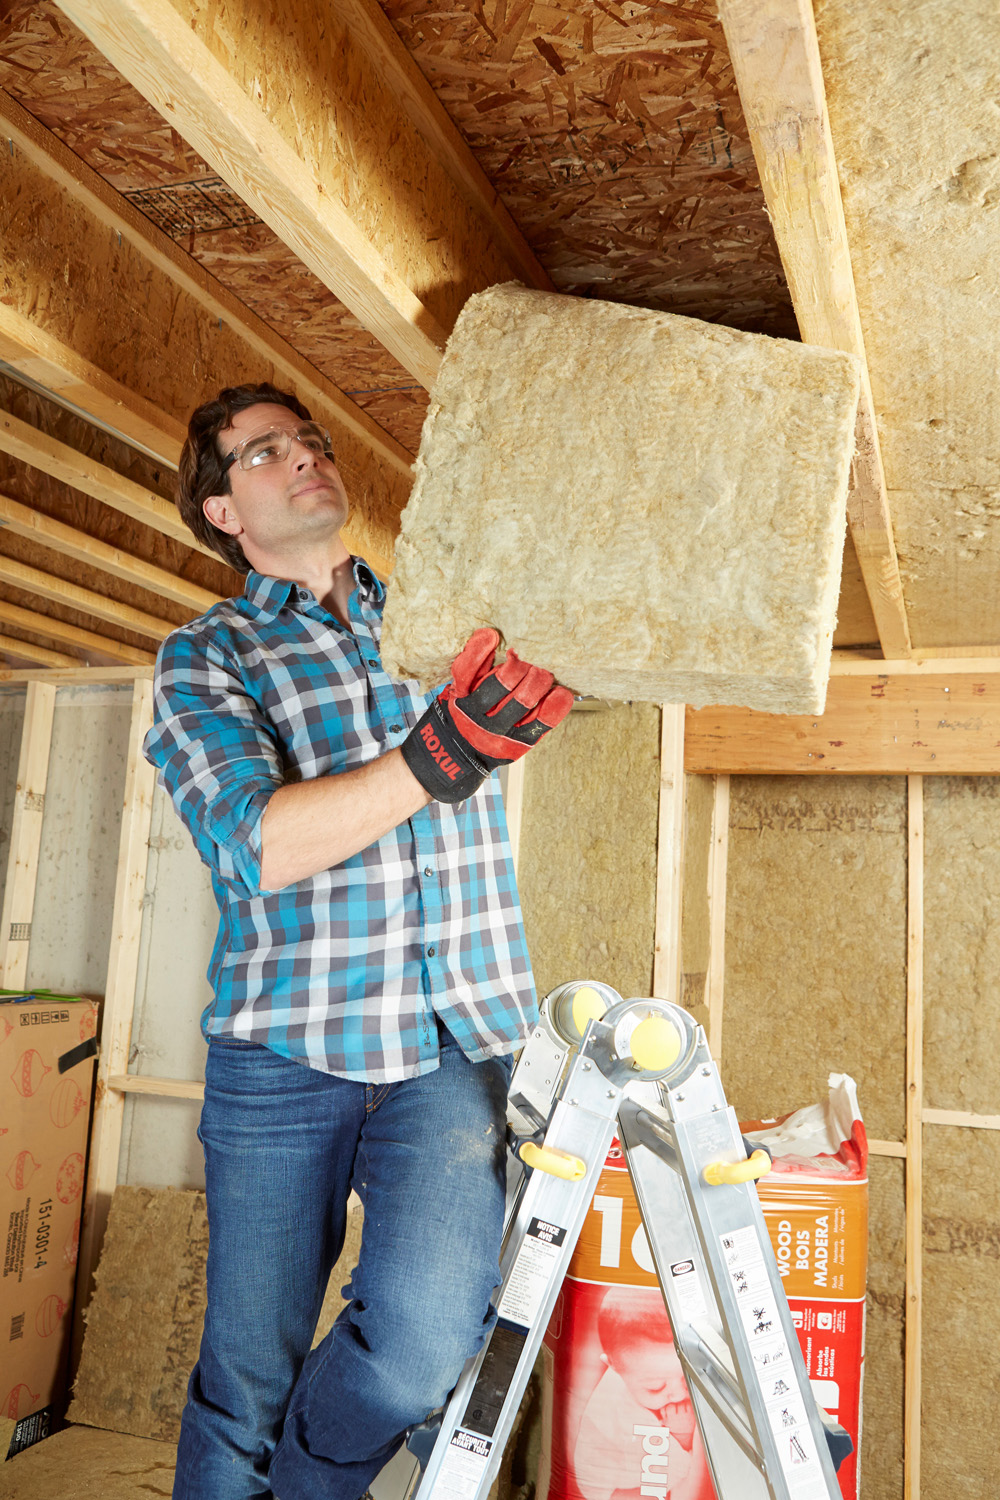 Felt vs. denim insulation for damping? | diyAudio